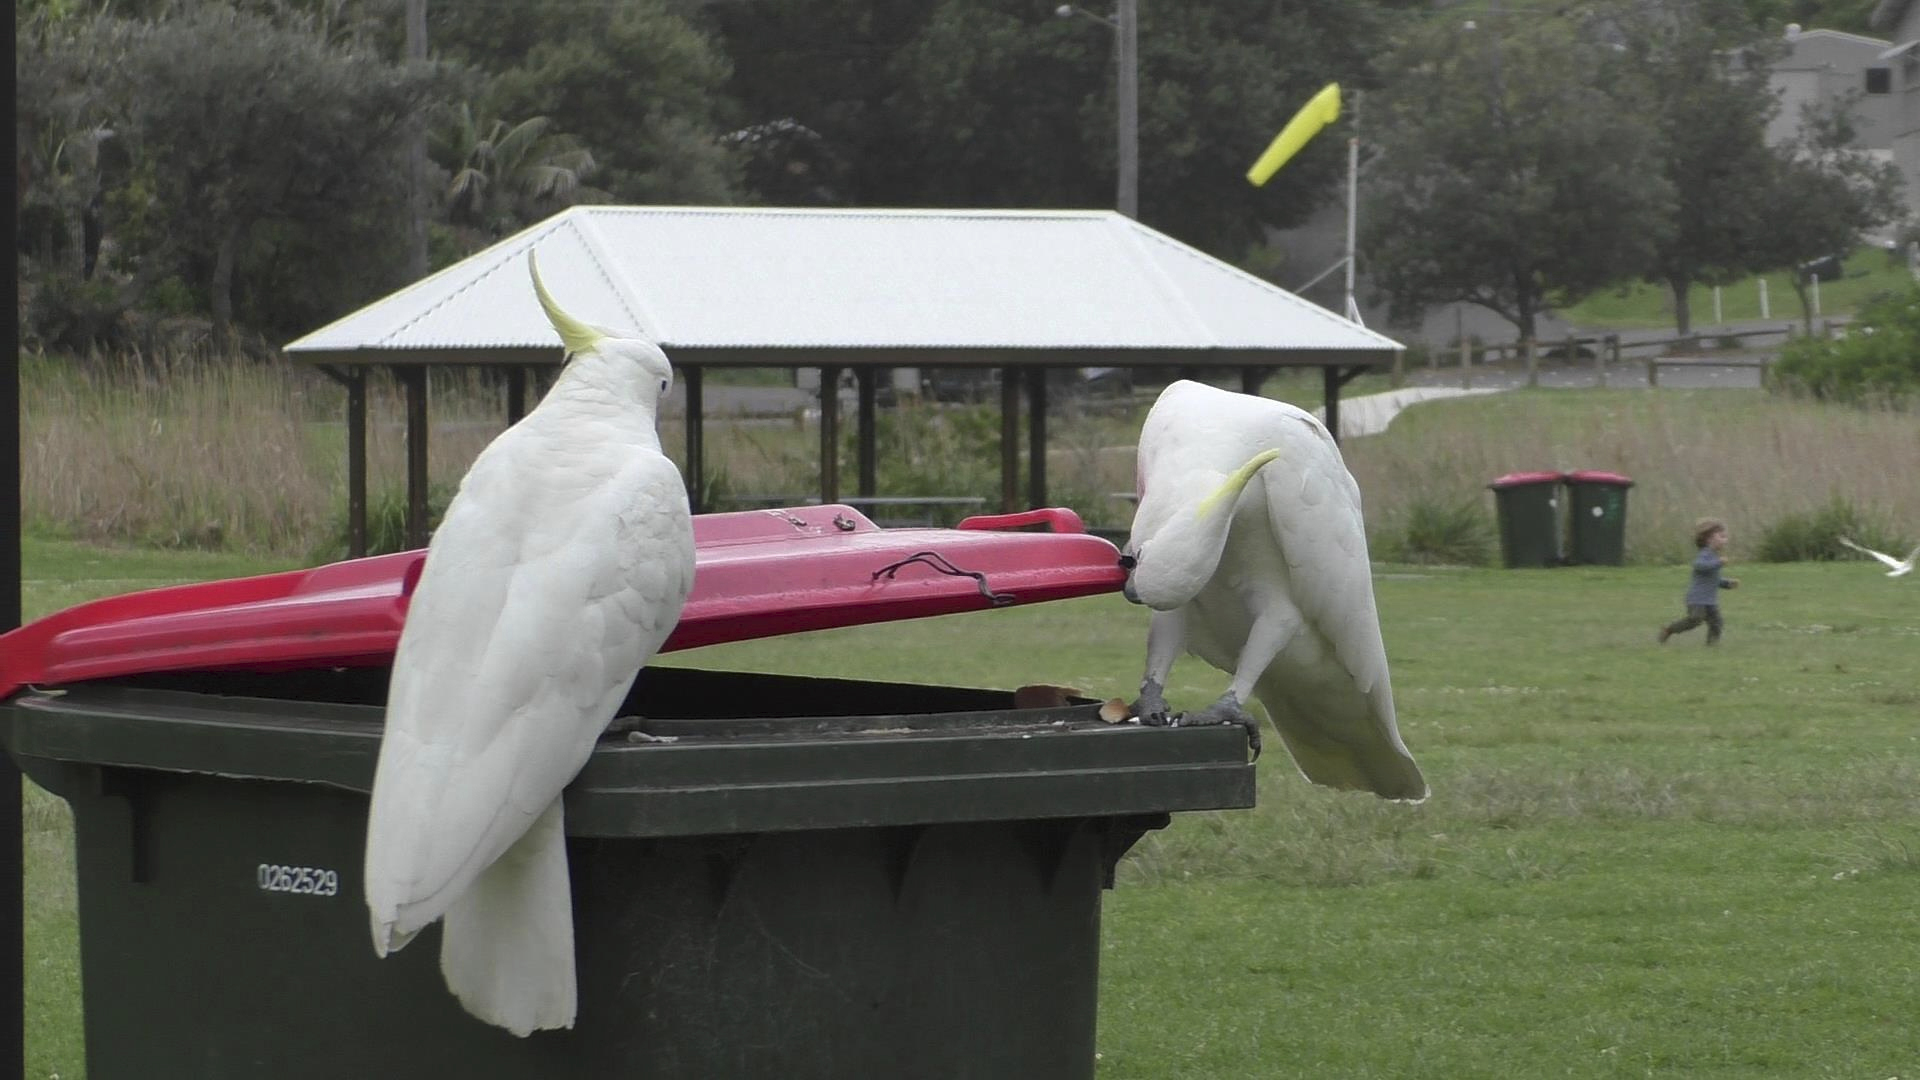 The birds learn to open bins